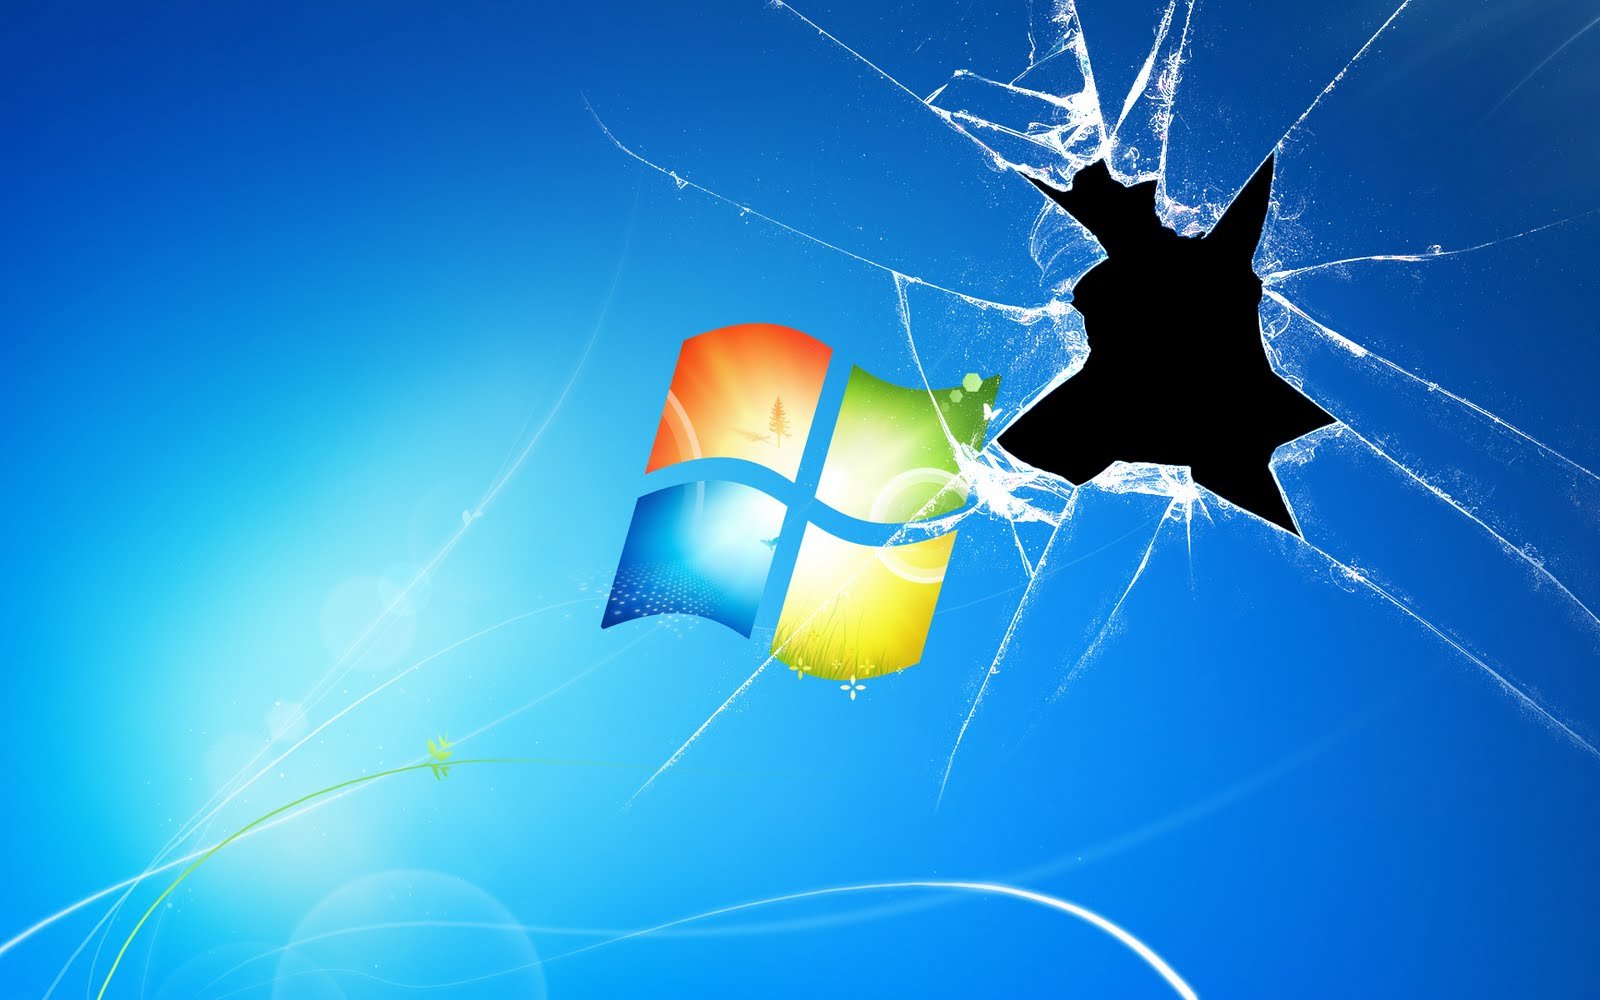 windows 7 broken desktop wallpaper hd windows 7 wallpaper hd windows 7